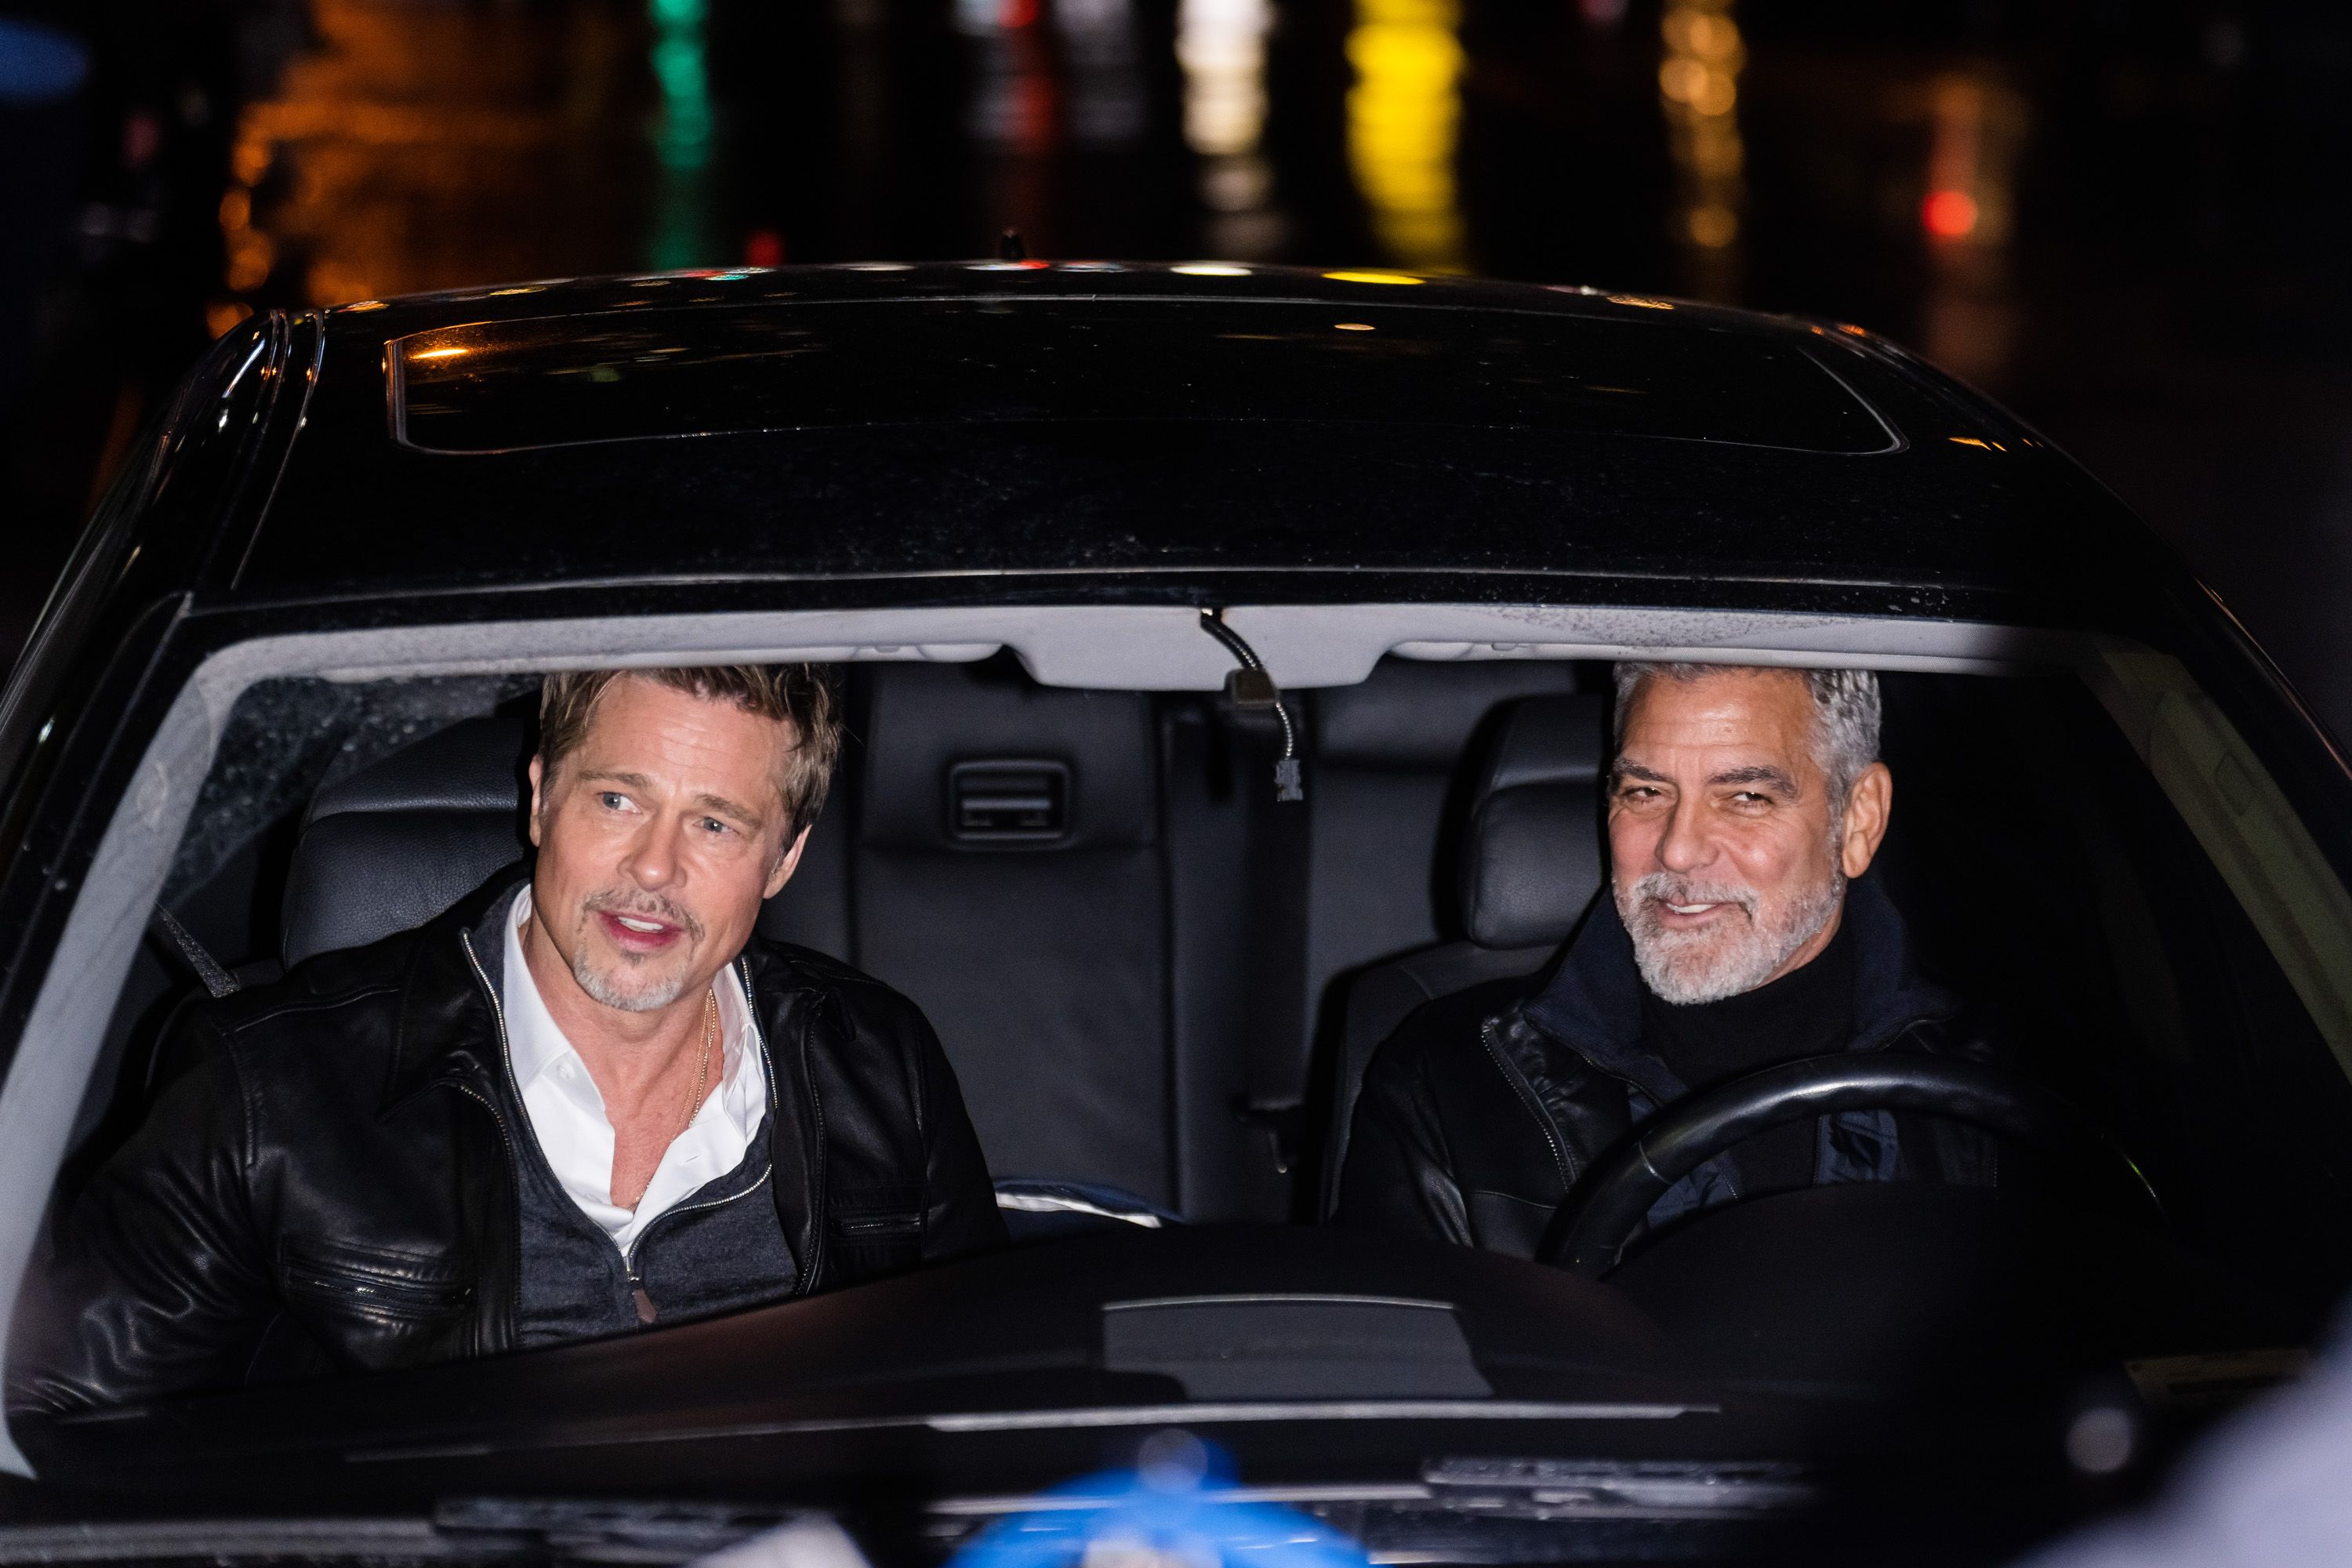 Brad Pitt & George Clooney